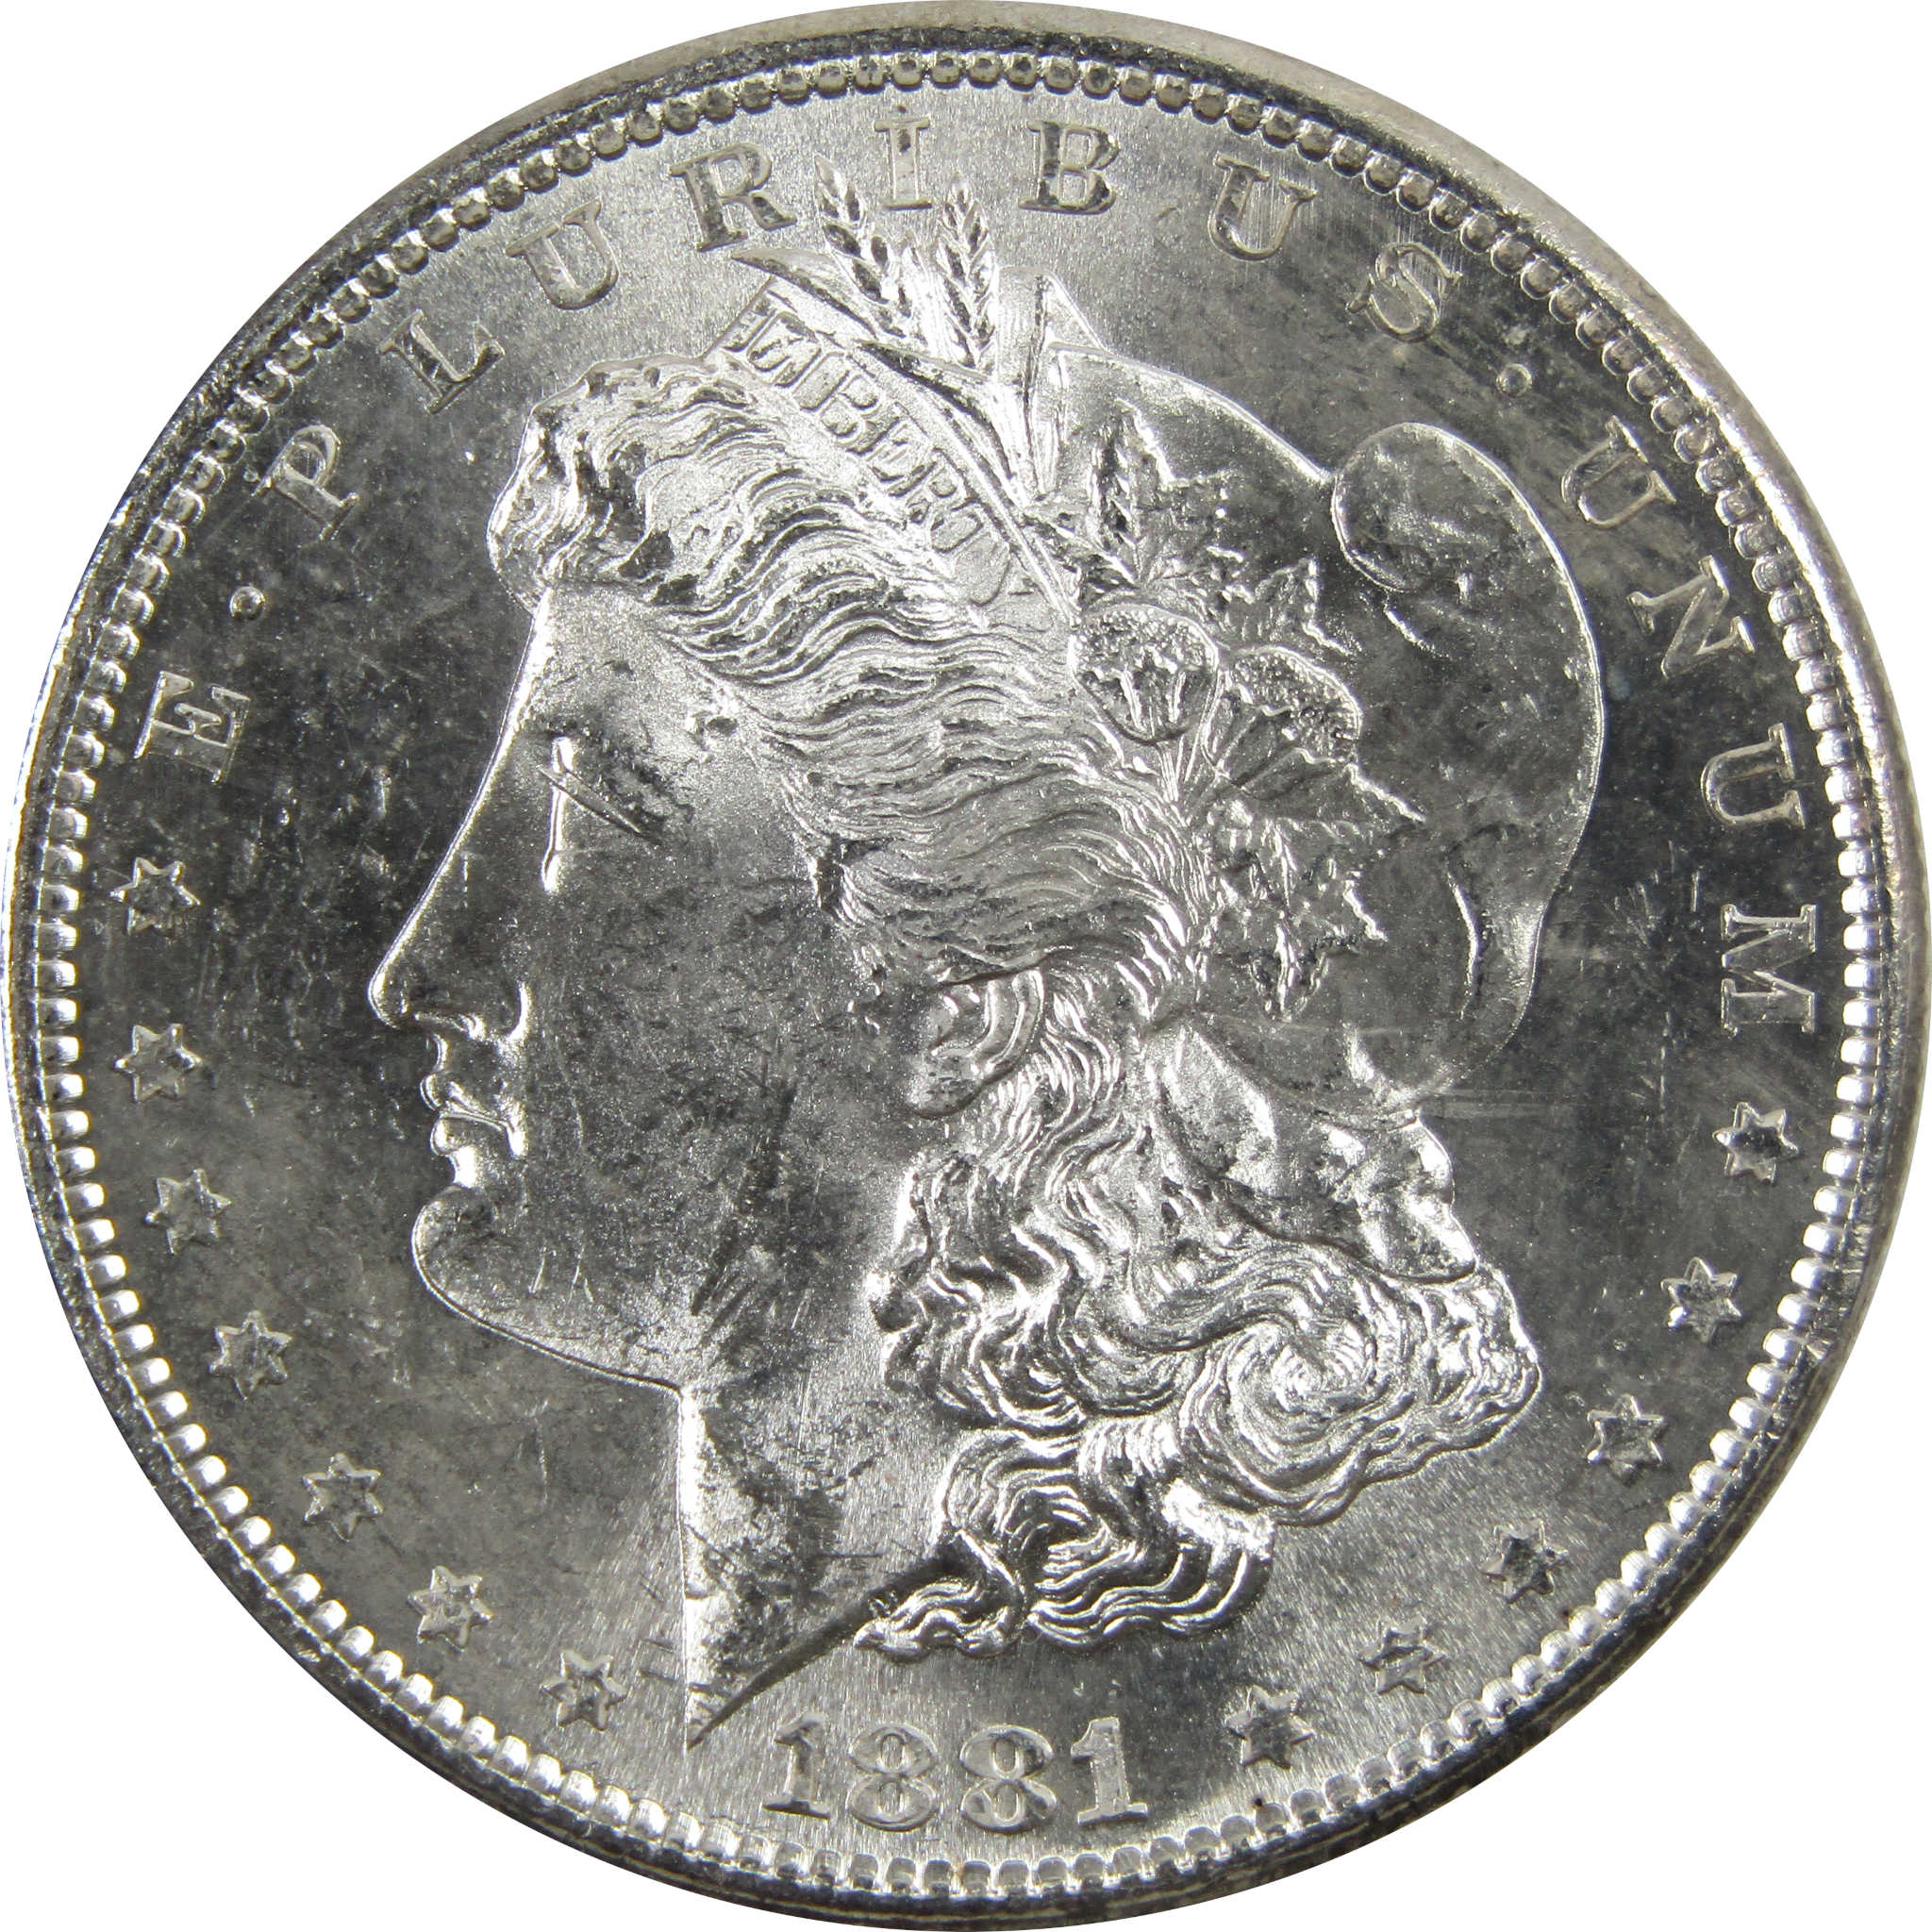 1881 S Morgan Dollar BU Uncirculated 90% Silver $1 Coin SKU:I5330 - Morgan coin - Morgan silver dollar - Morgan silver dollar for sale - Profile Coins &amp; Collectibles